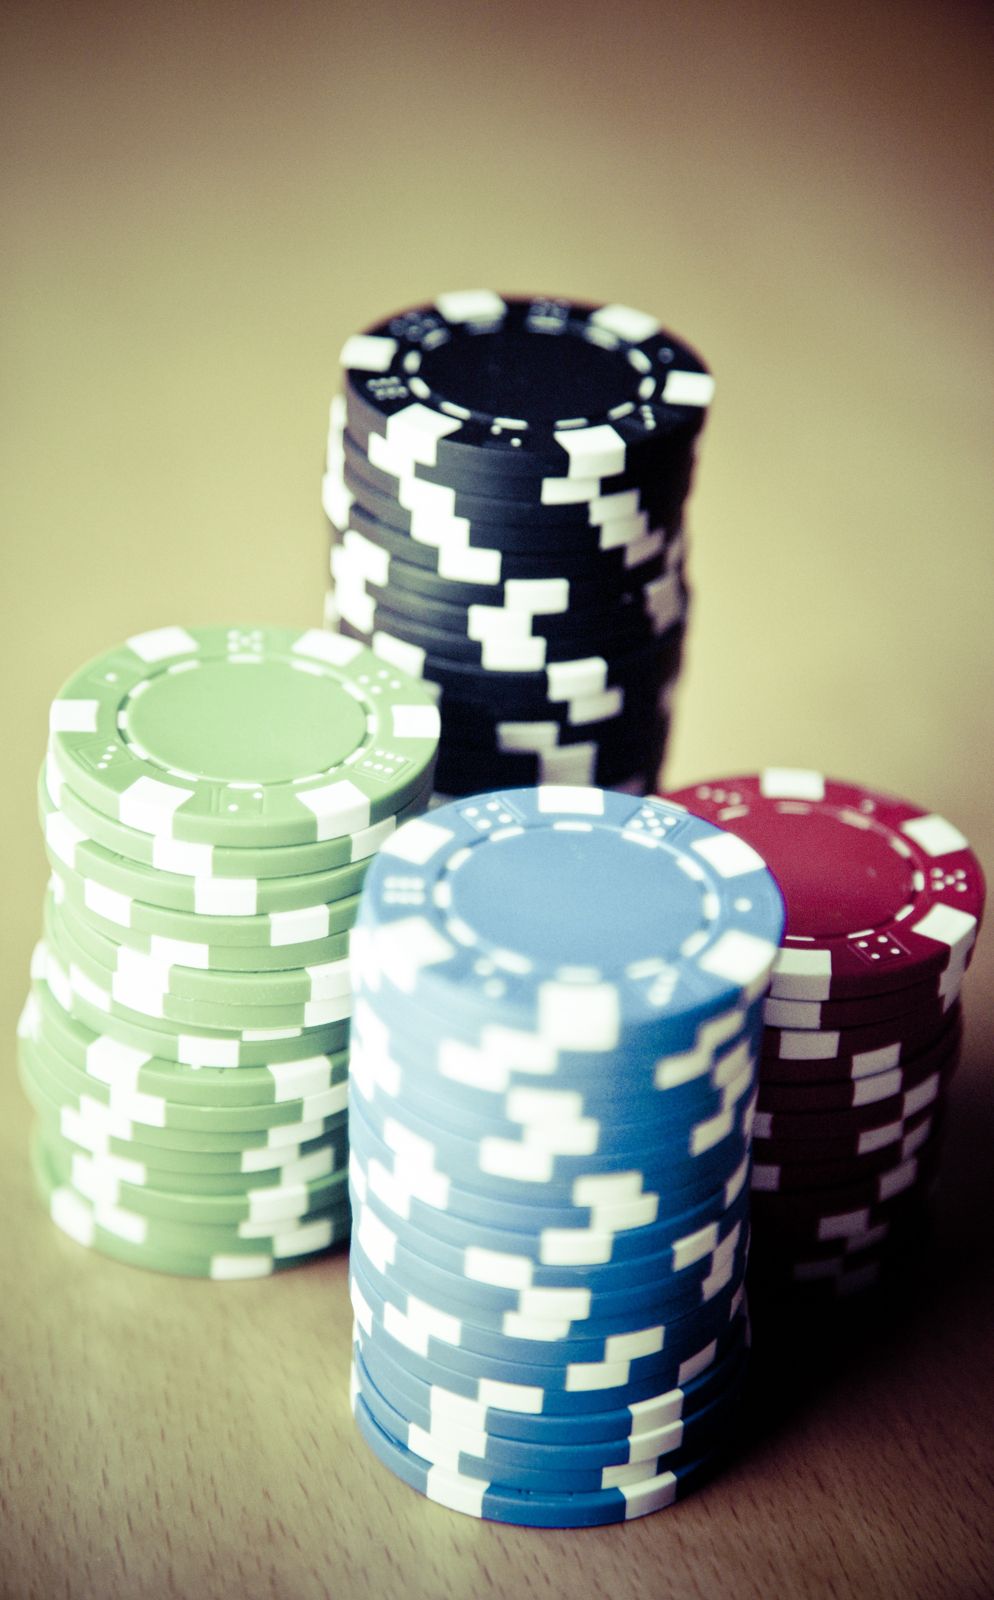 Play Game Chips Gamble Poker Gambling Stacks Casino Tokens